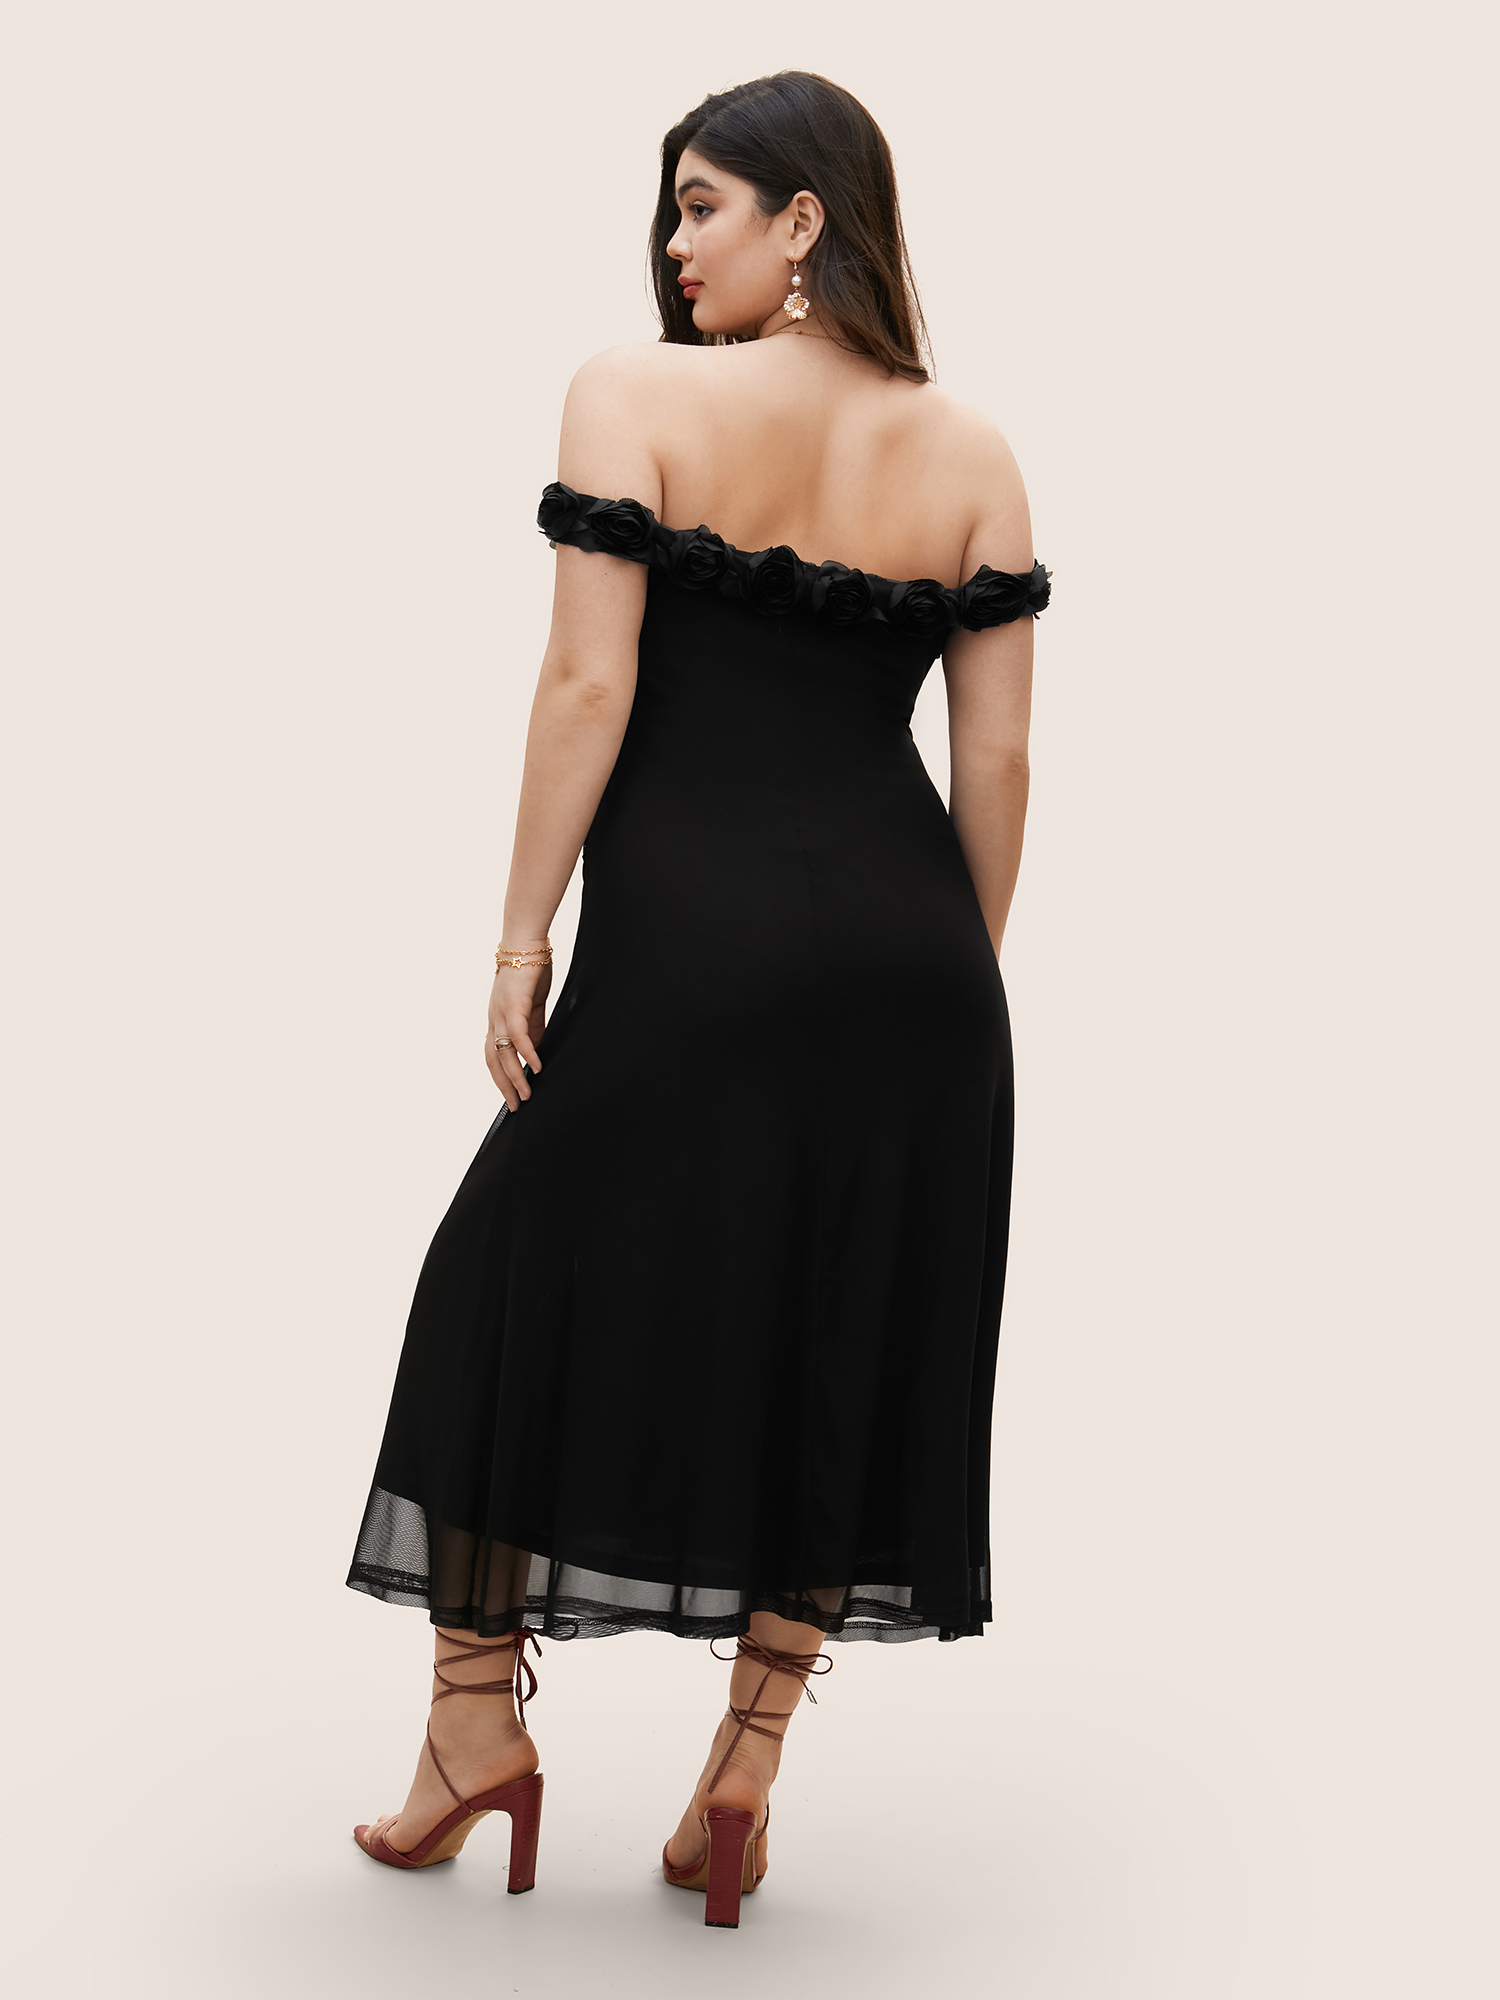 

Plus Size One Shoulder Stereo Flower Design Dress Black Women Texture One-shoulder neck Sleeveless Curvy BloomChic